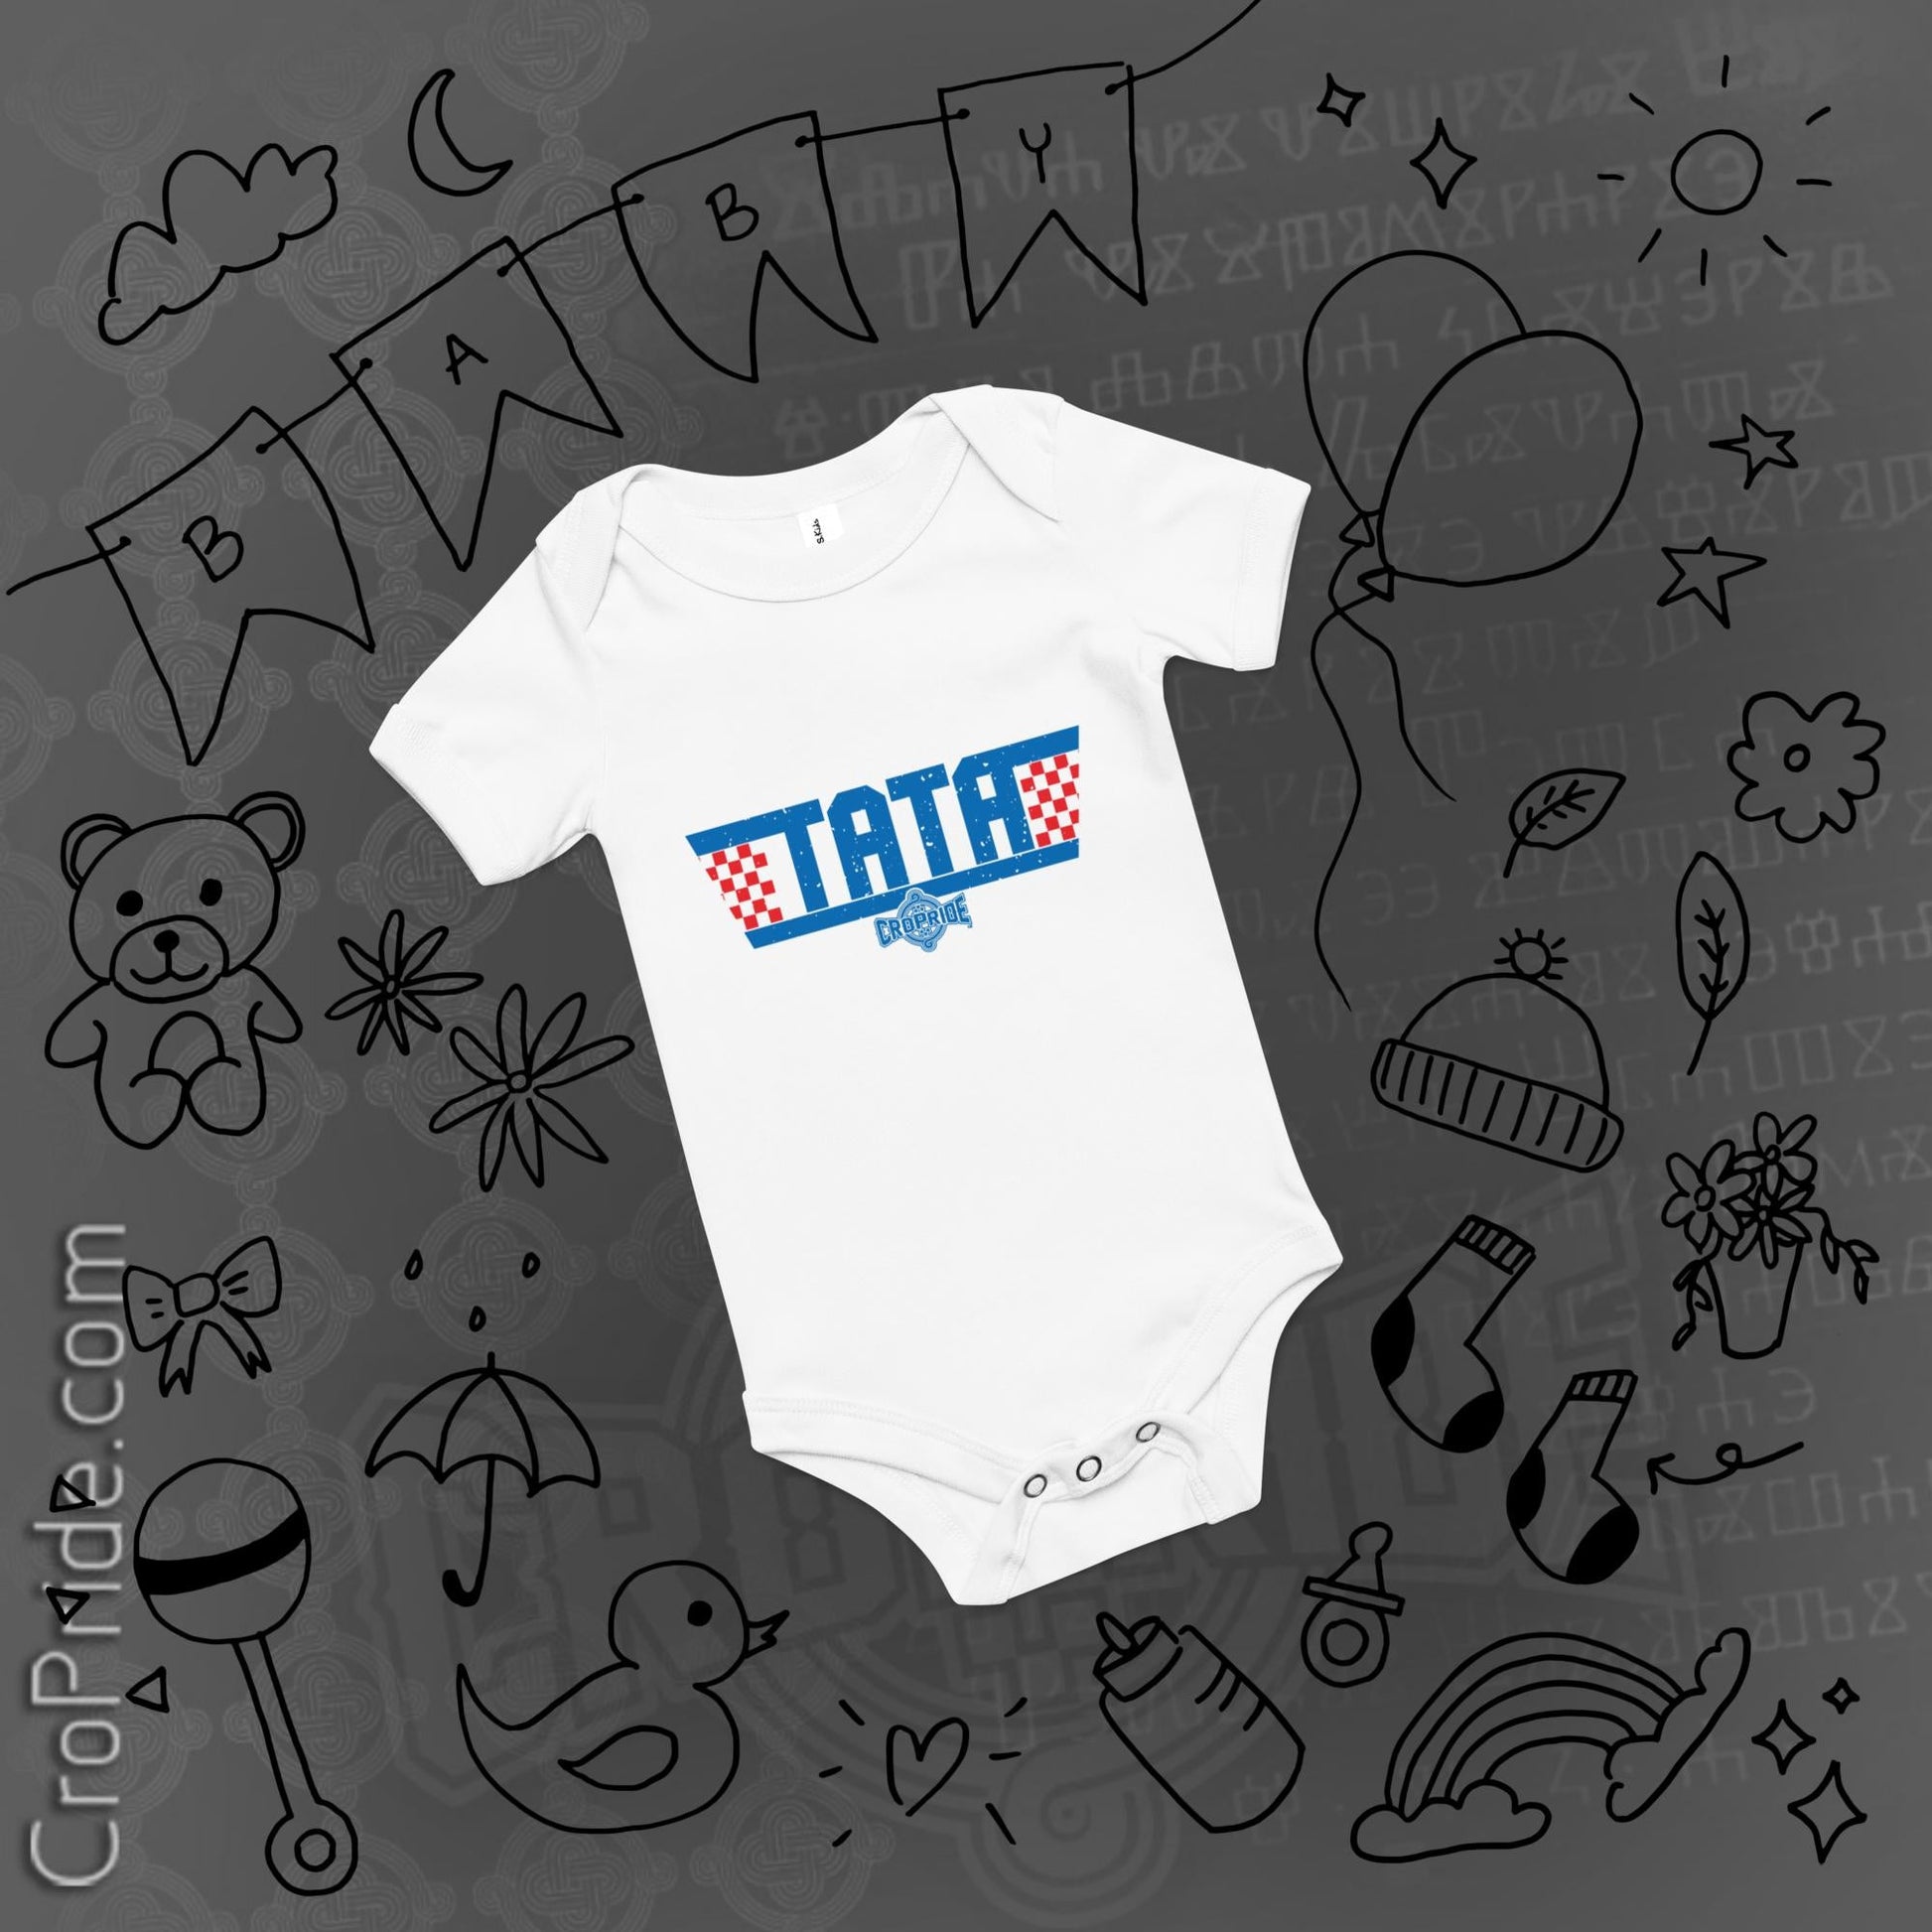 Croatian Baby Onesie - "Tata" - Declare Your Favorite